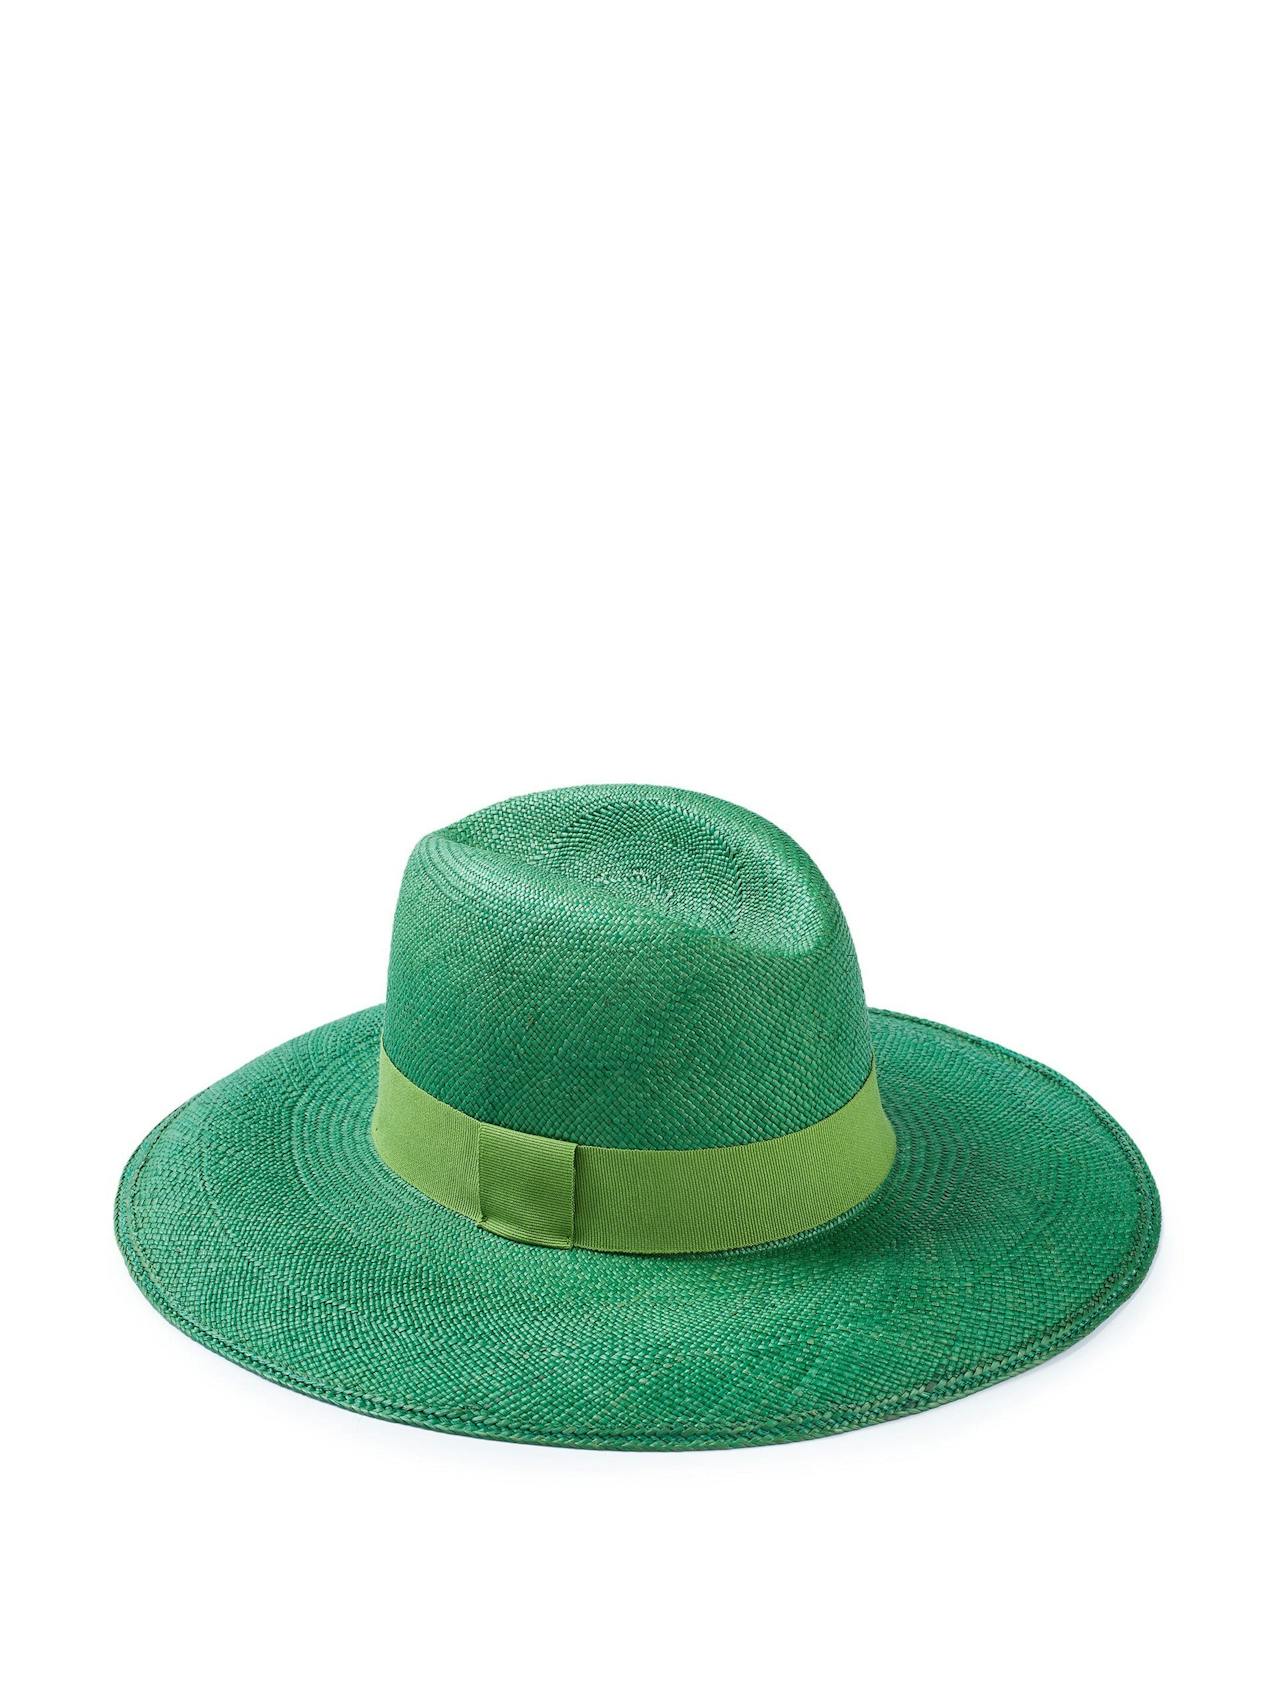 Livia hat in green